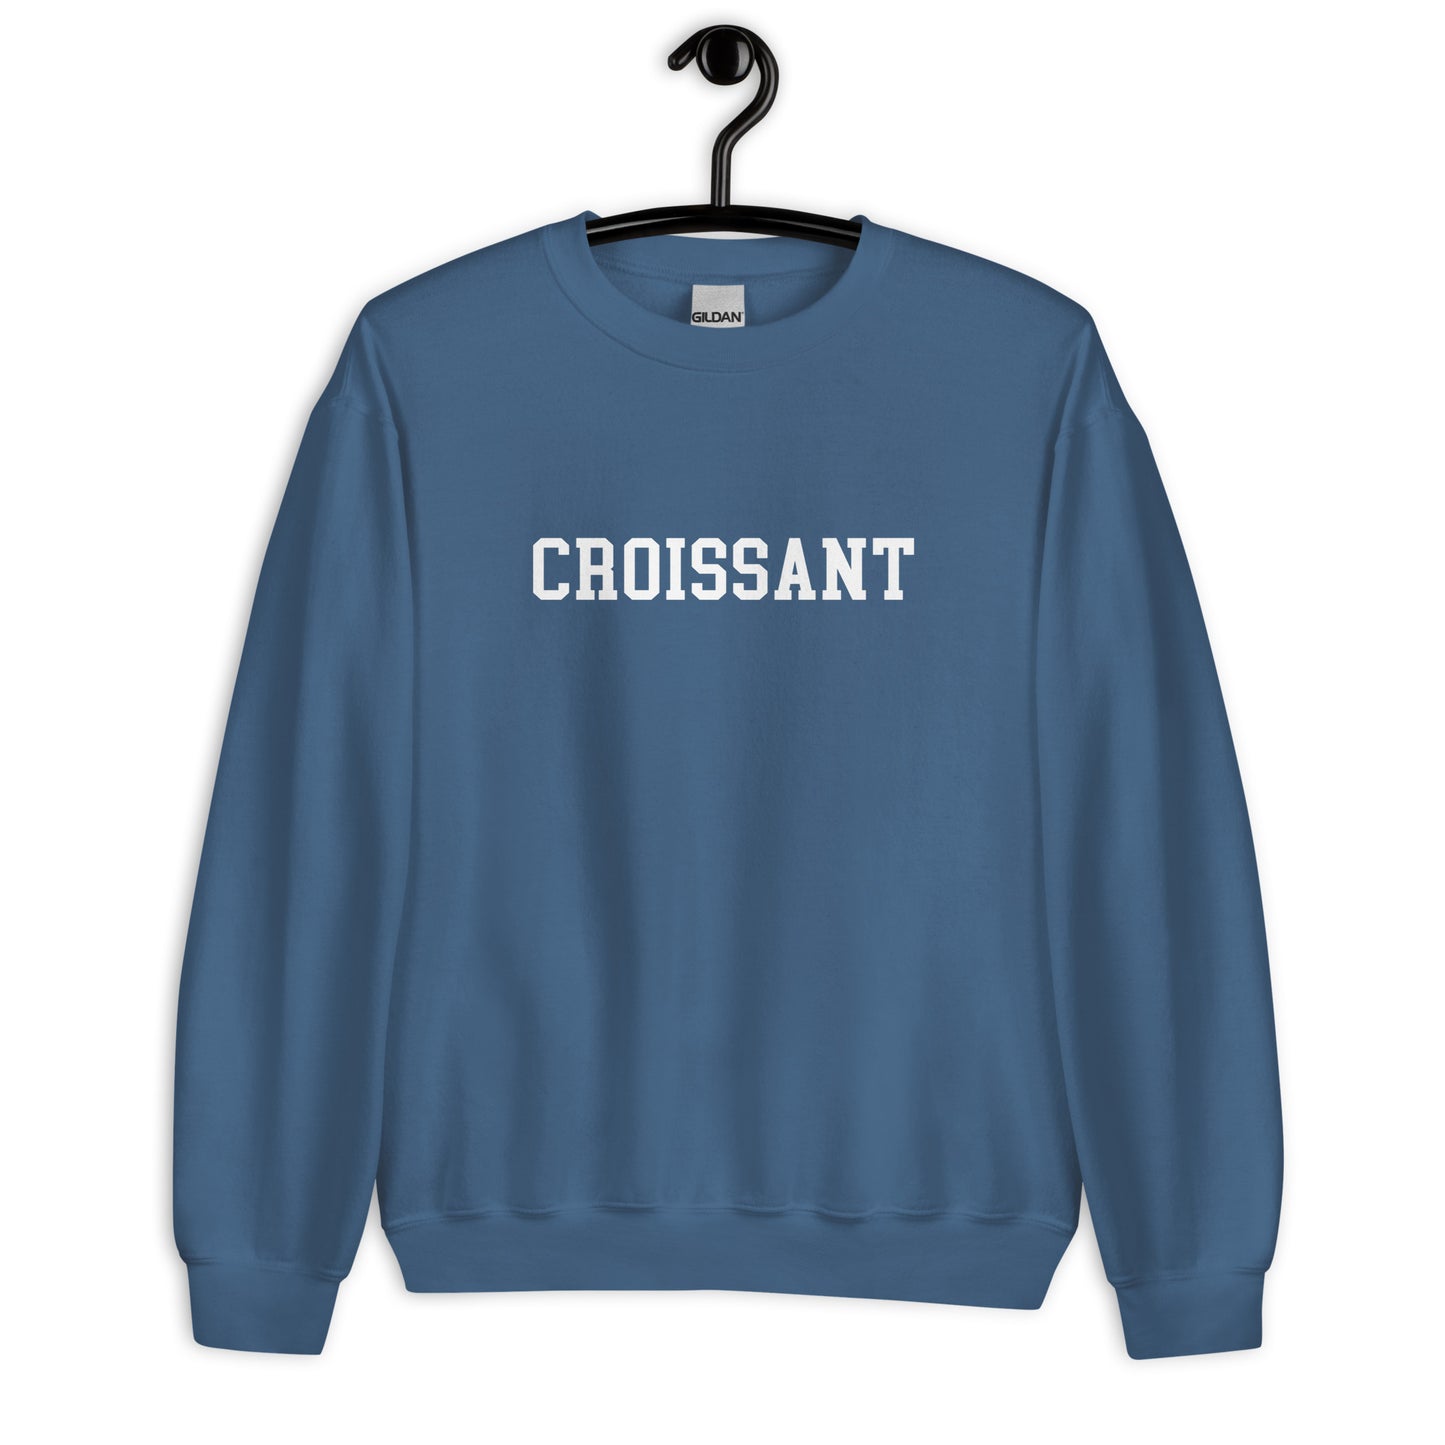 Croissant Sweatshirt - Straight Font